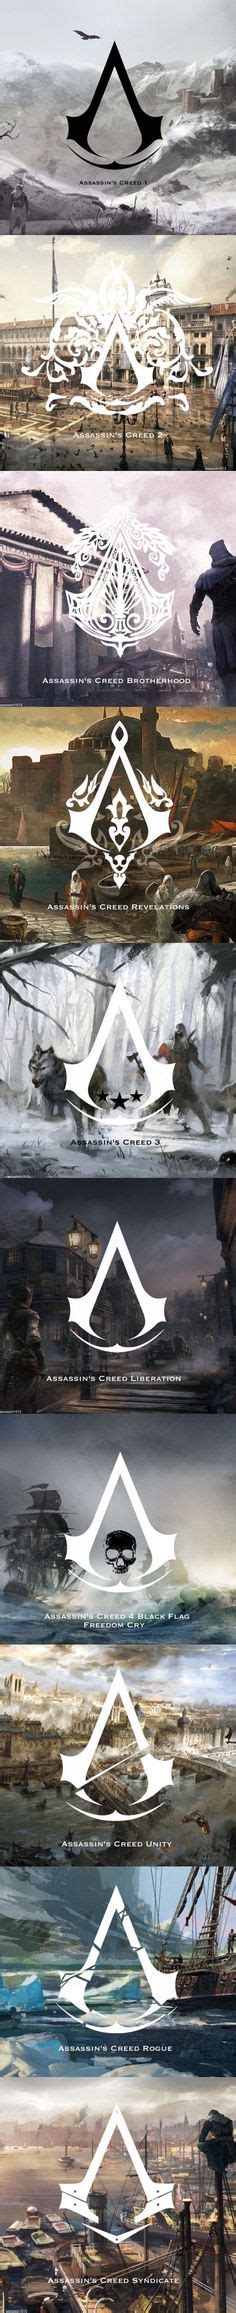 Assassin S Creed Ideen Connor Kenway Assassine Assassins Creed